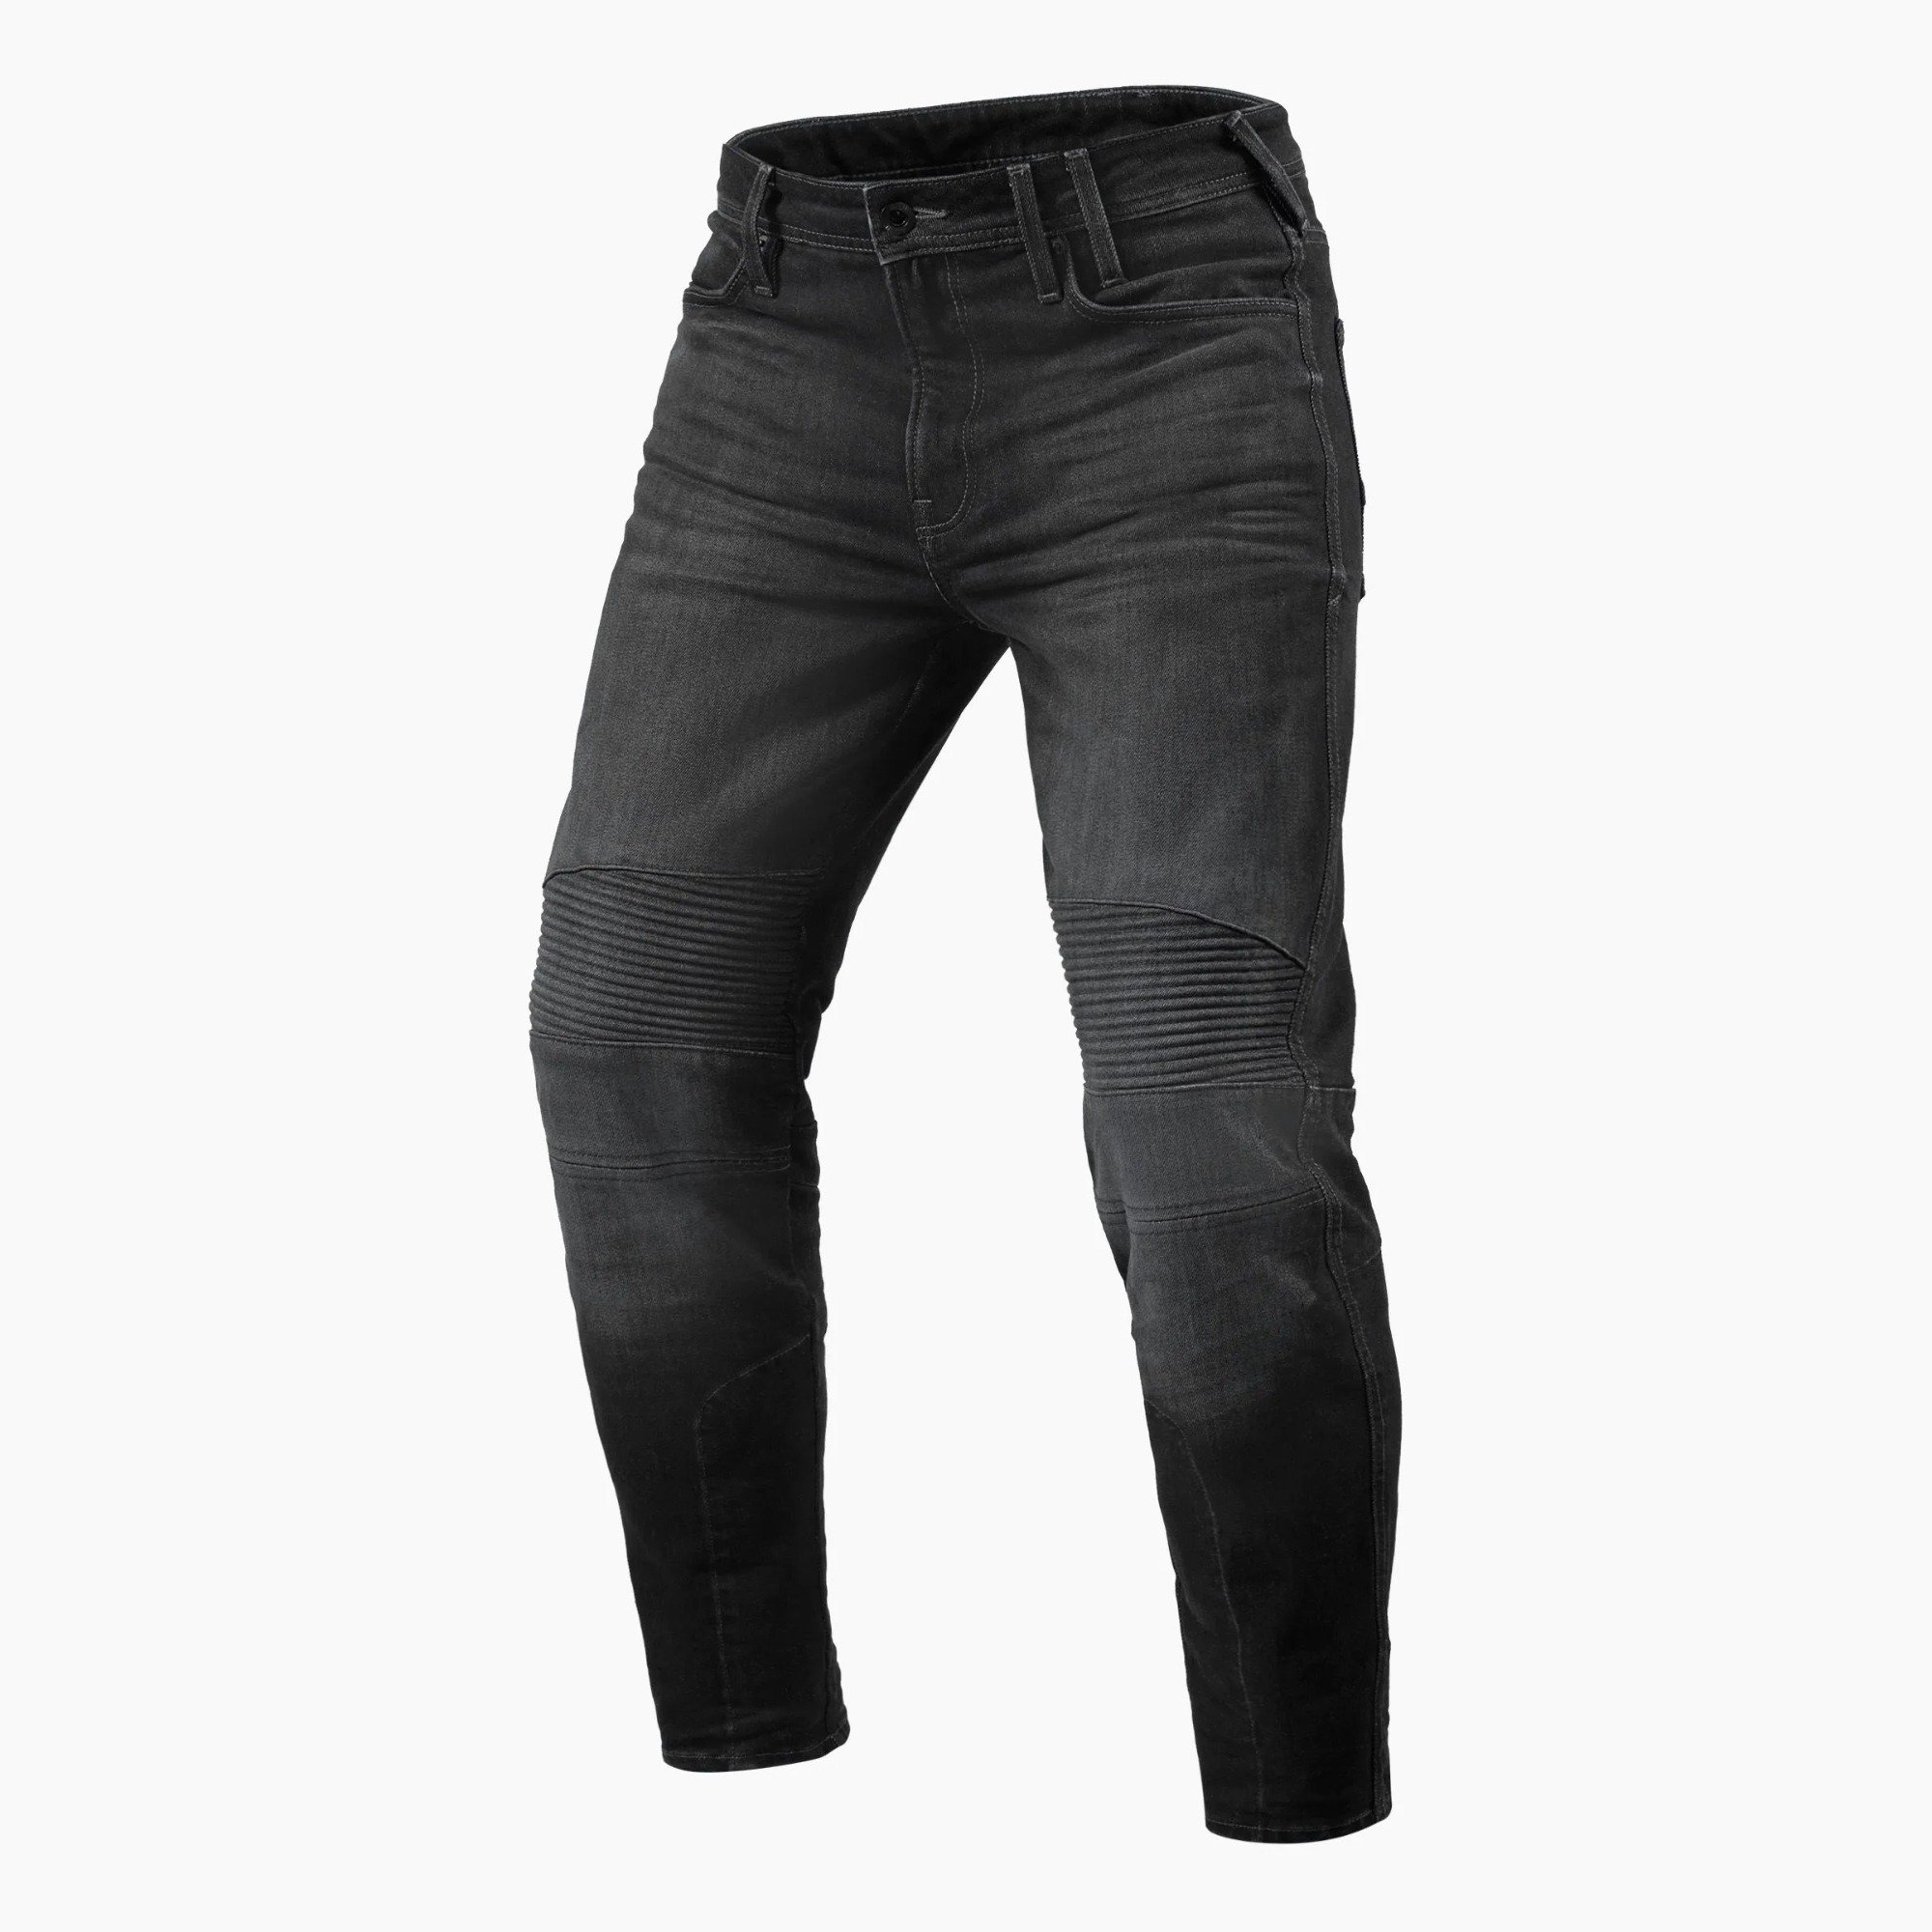 Image of REV'IT! Jeans Moto 2 TF Dark Grey Used Motorcycle Jeans Talla L34/W32